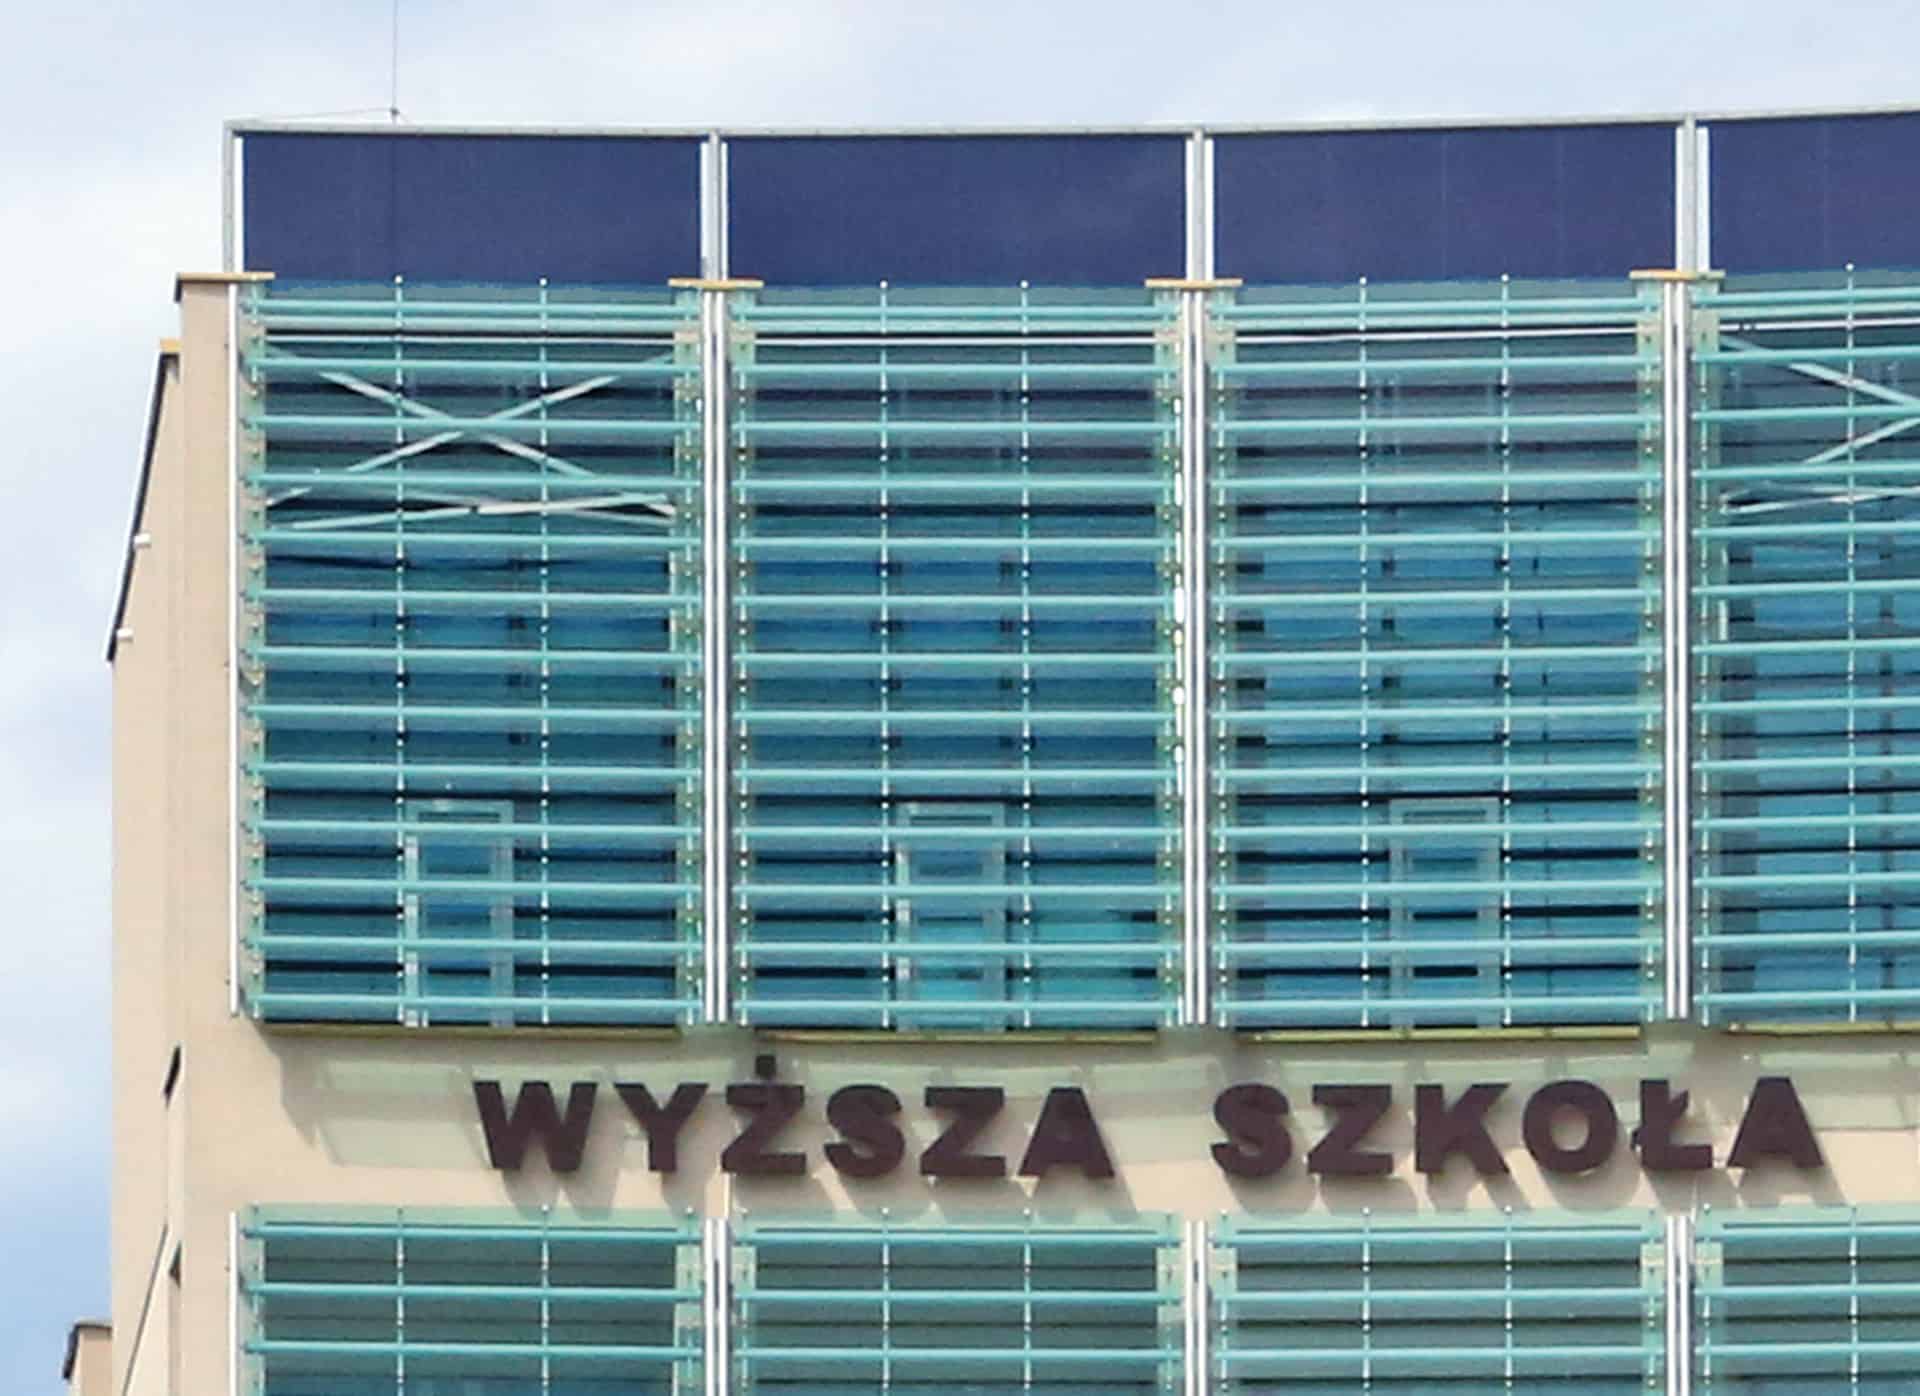 Rzeszów / University of Law and Public Administration